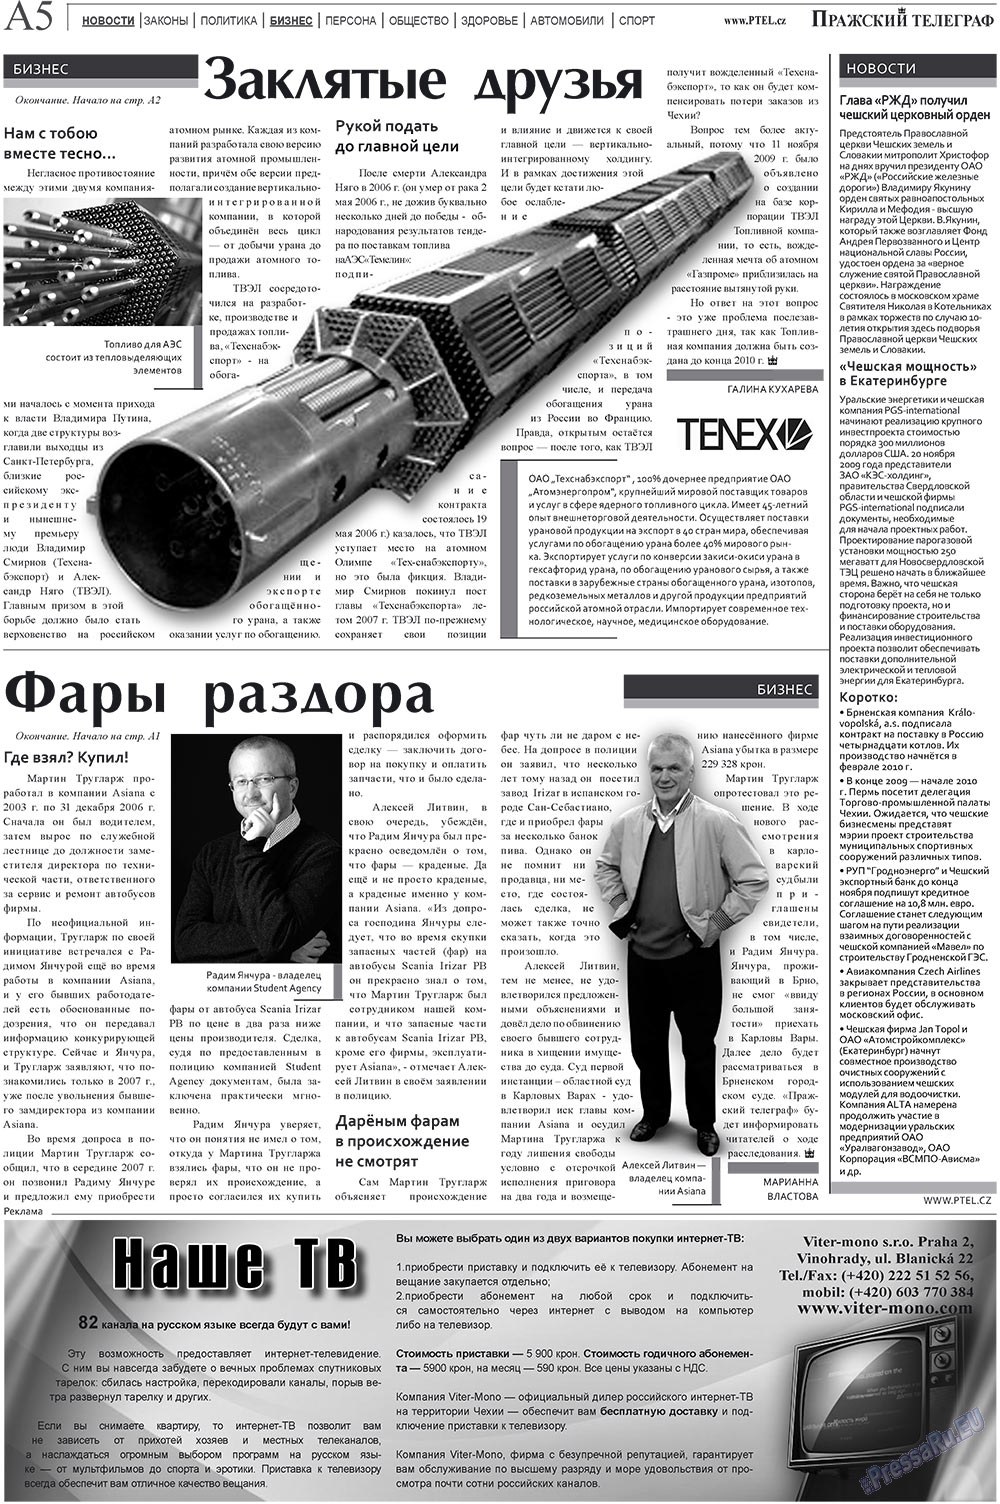 Пражский телеграф, газета. 2009 №32 стр.5